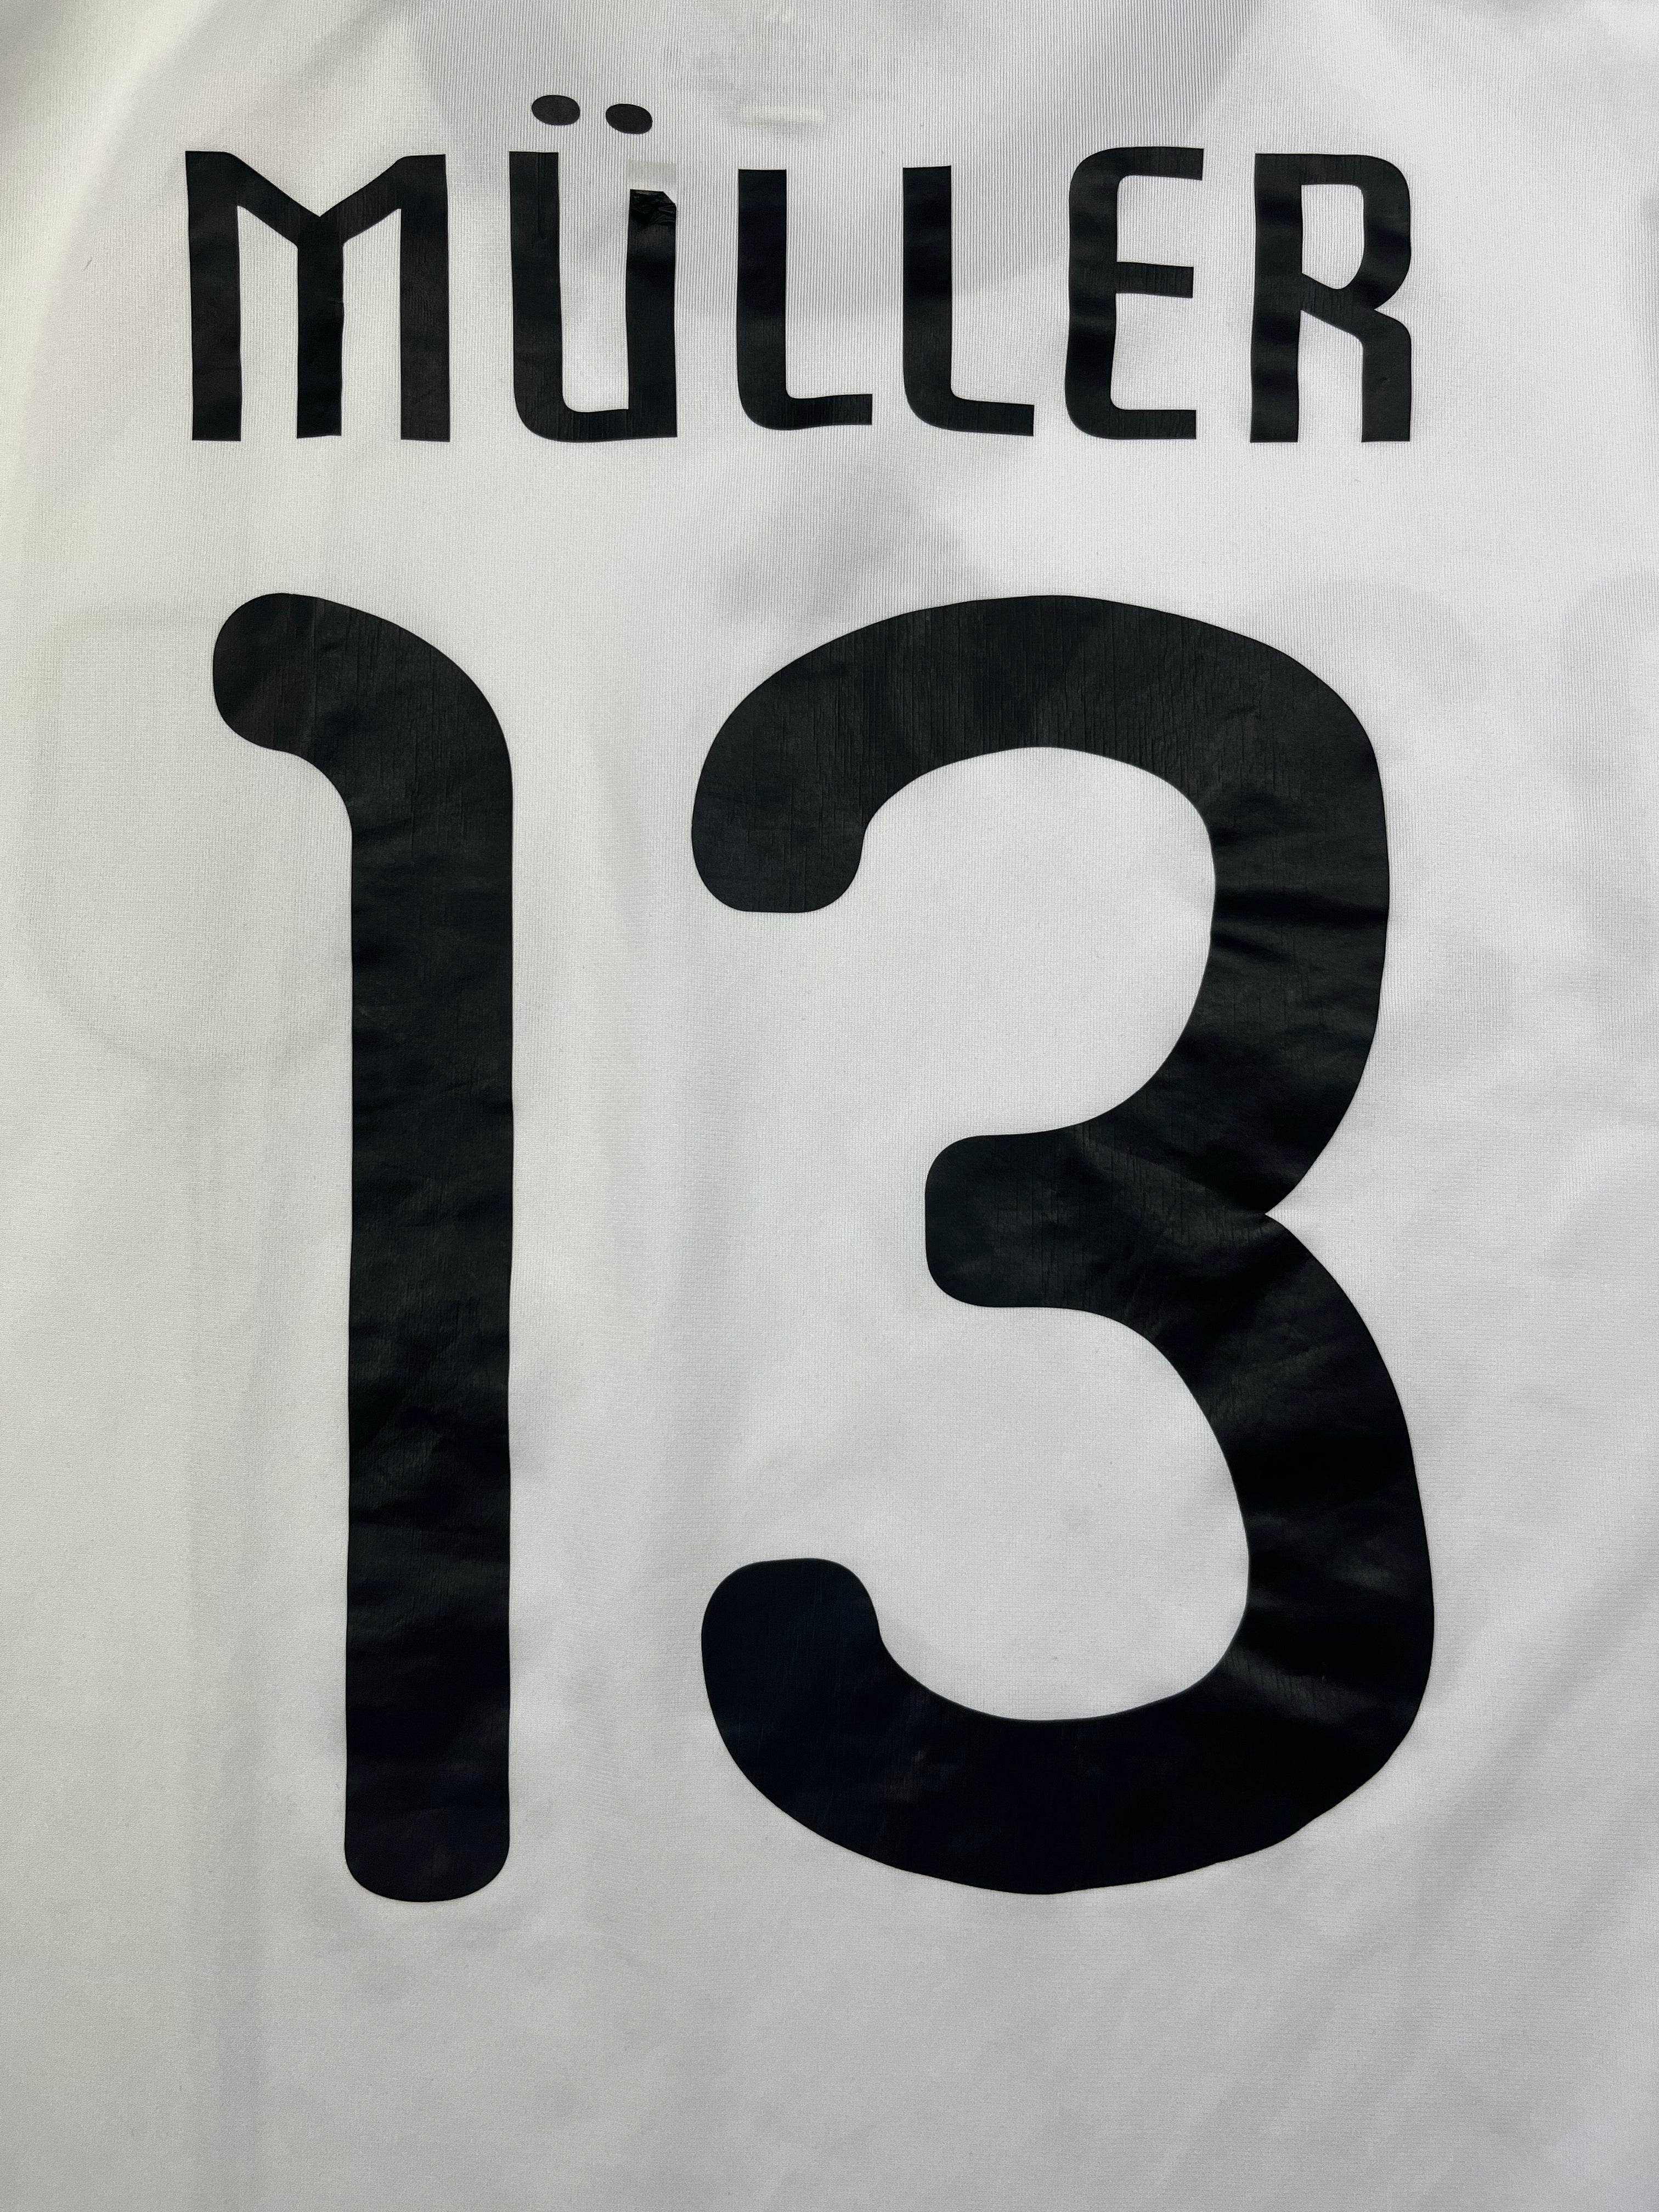 2010/11 Germany Home Shirt Muller #13 (XL) 8/10